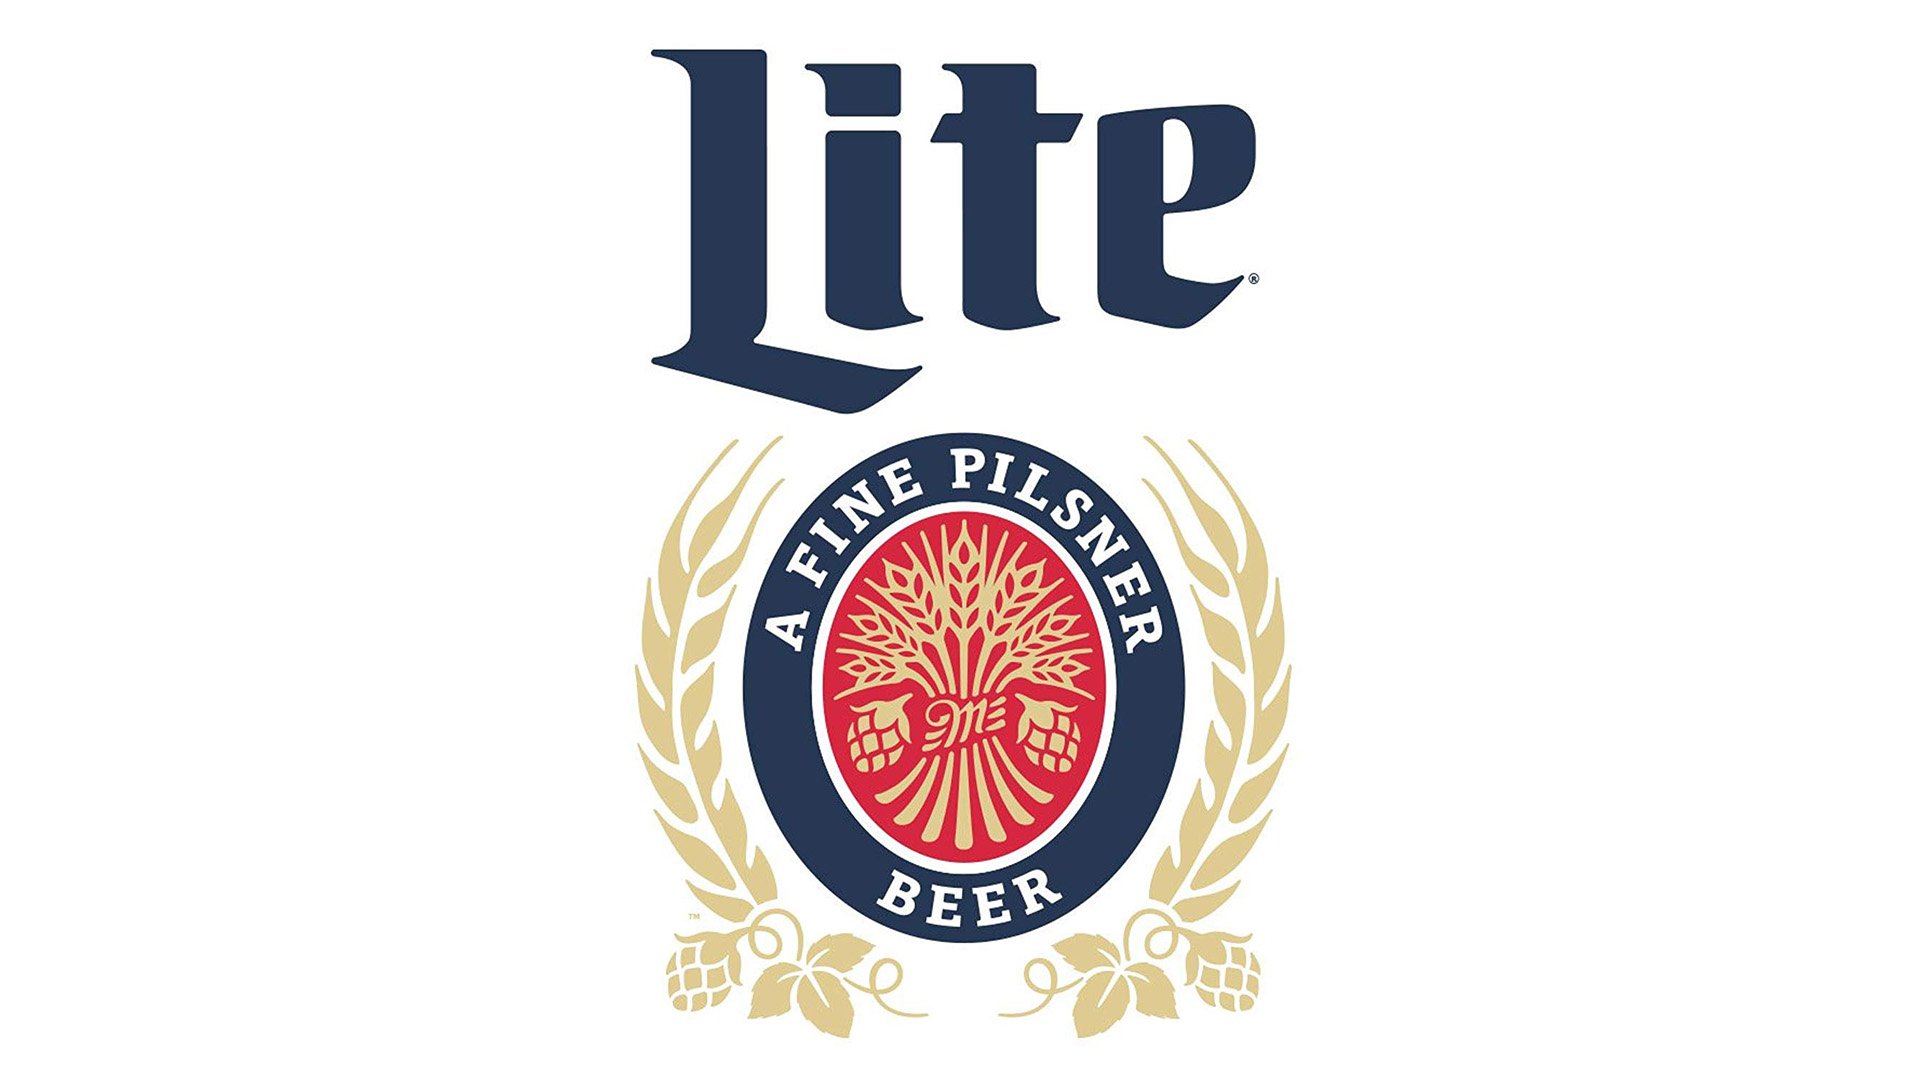 Meaning Miller Beer logo and symbol